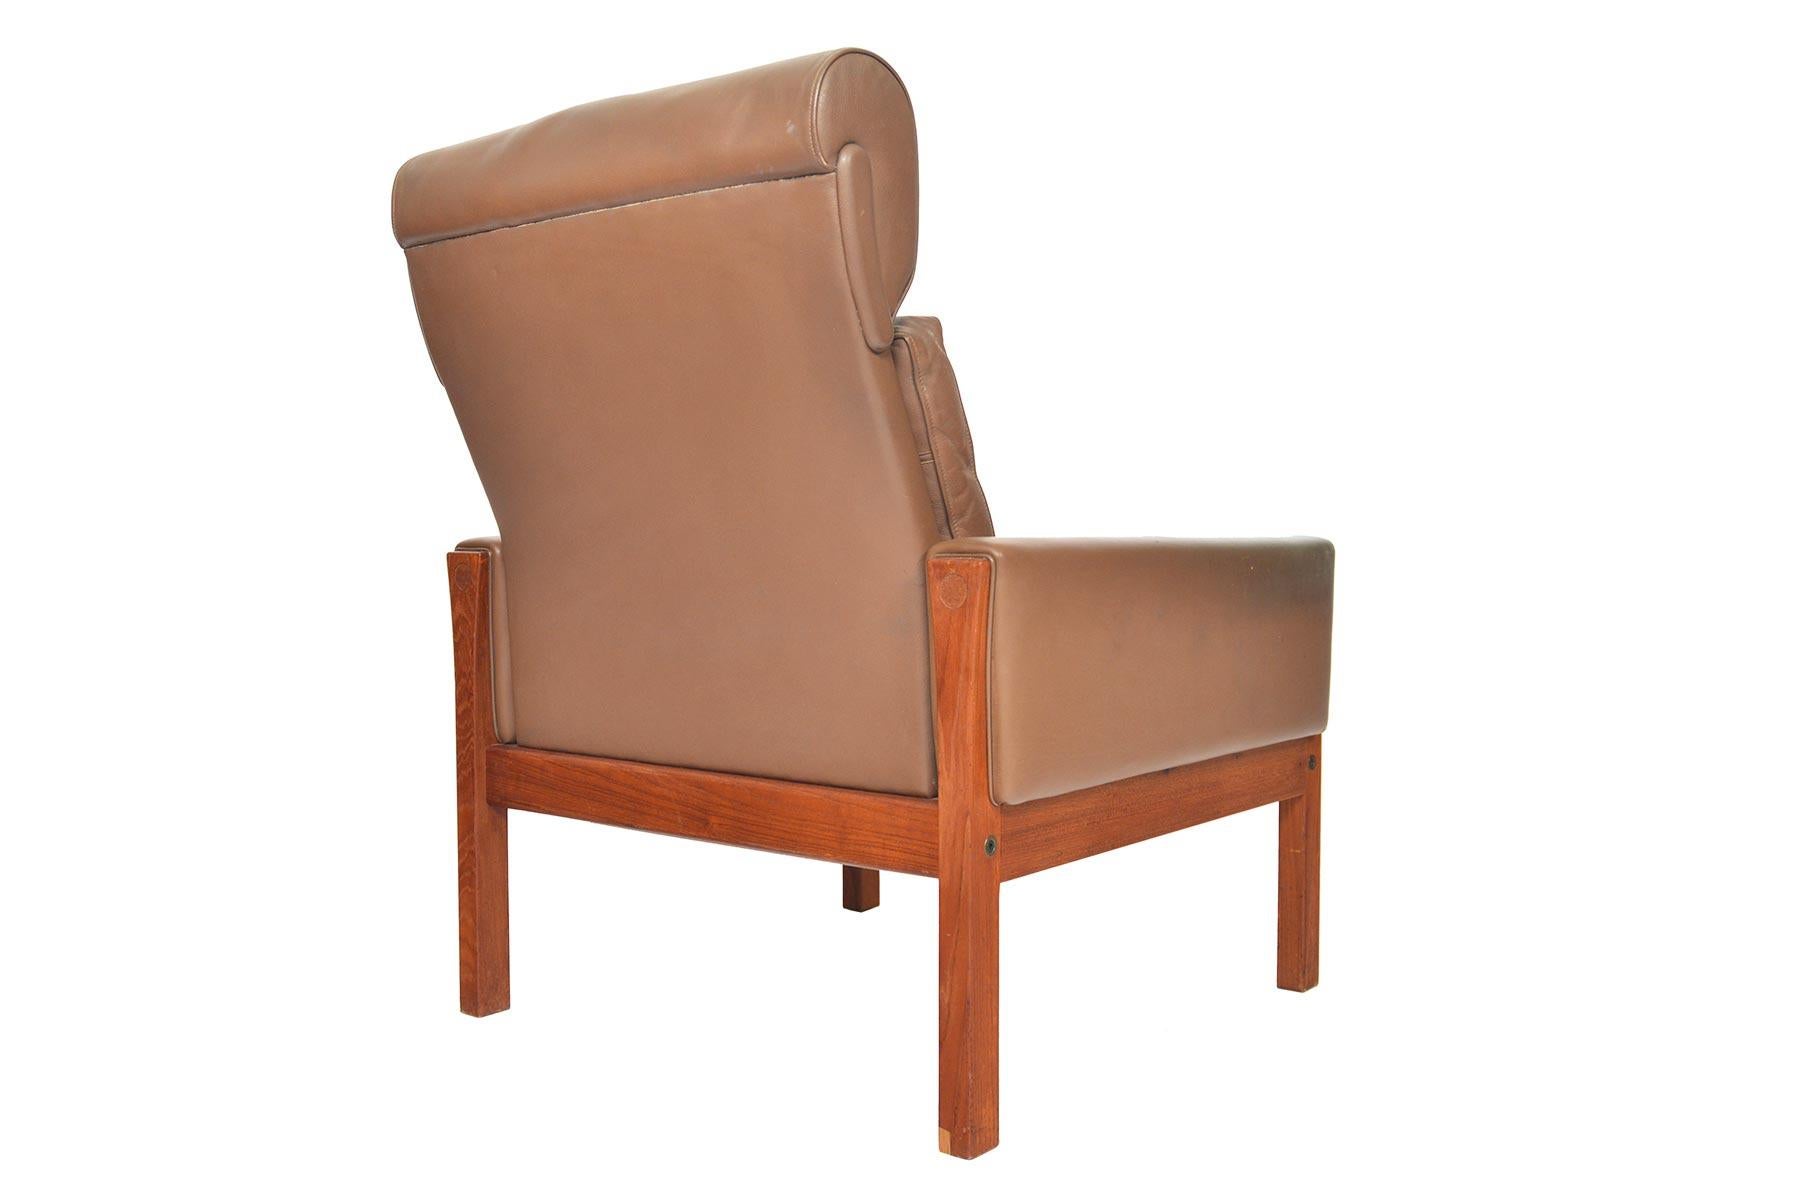 Swedish Hans Wegner AP 62 Highback Lounge Chair in Teak, Produced by AP Stolen For Sale